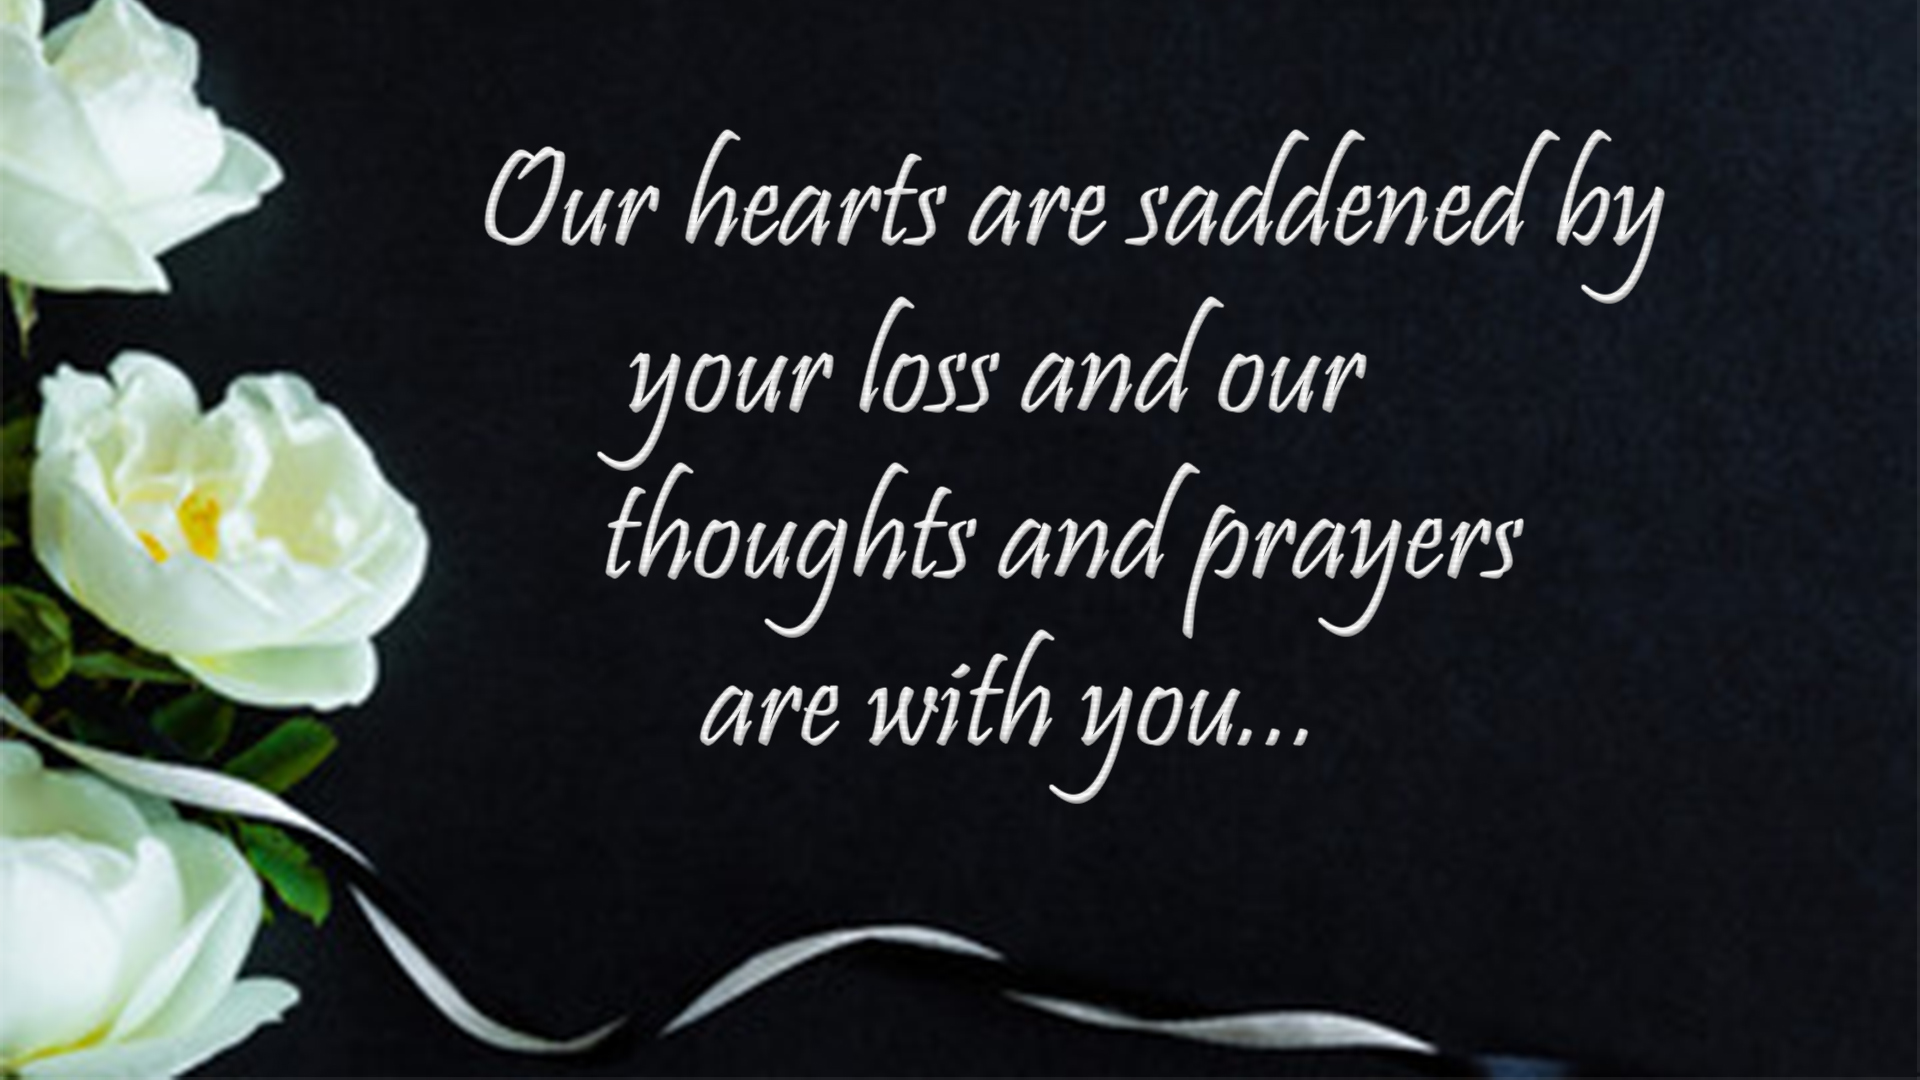 Condolences Quotes & Sympathy Messages Image Free Download